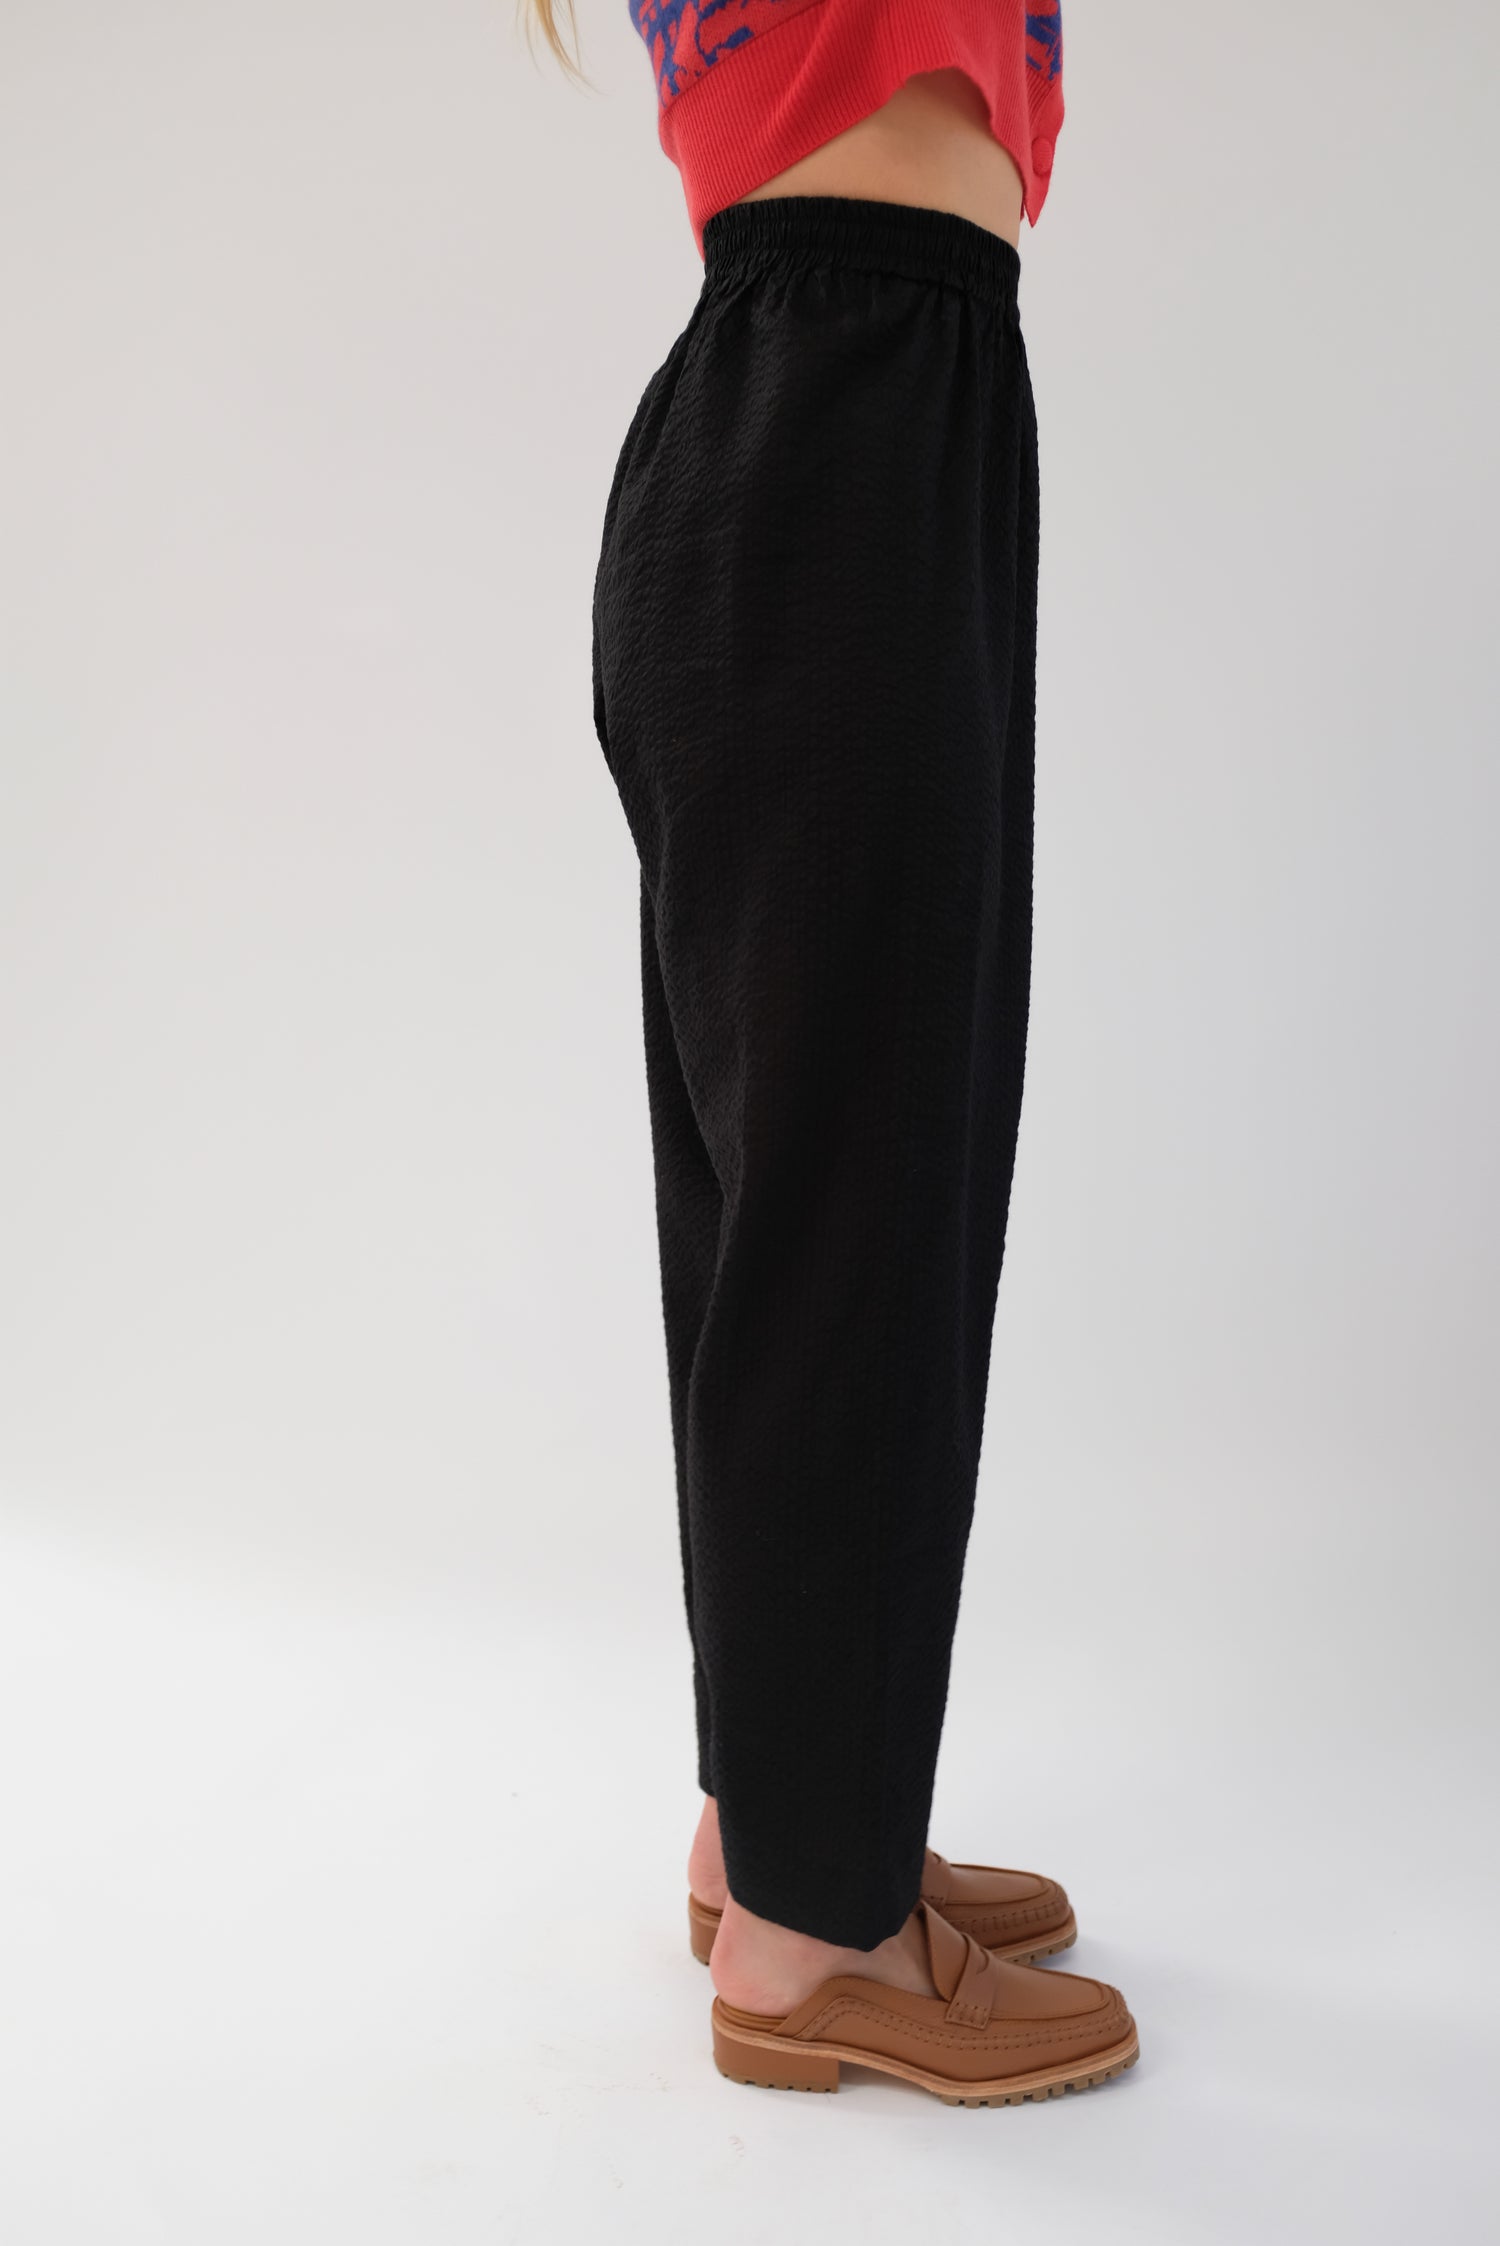 Beklina Basic Pant Textured Black